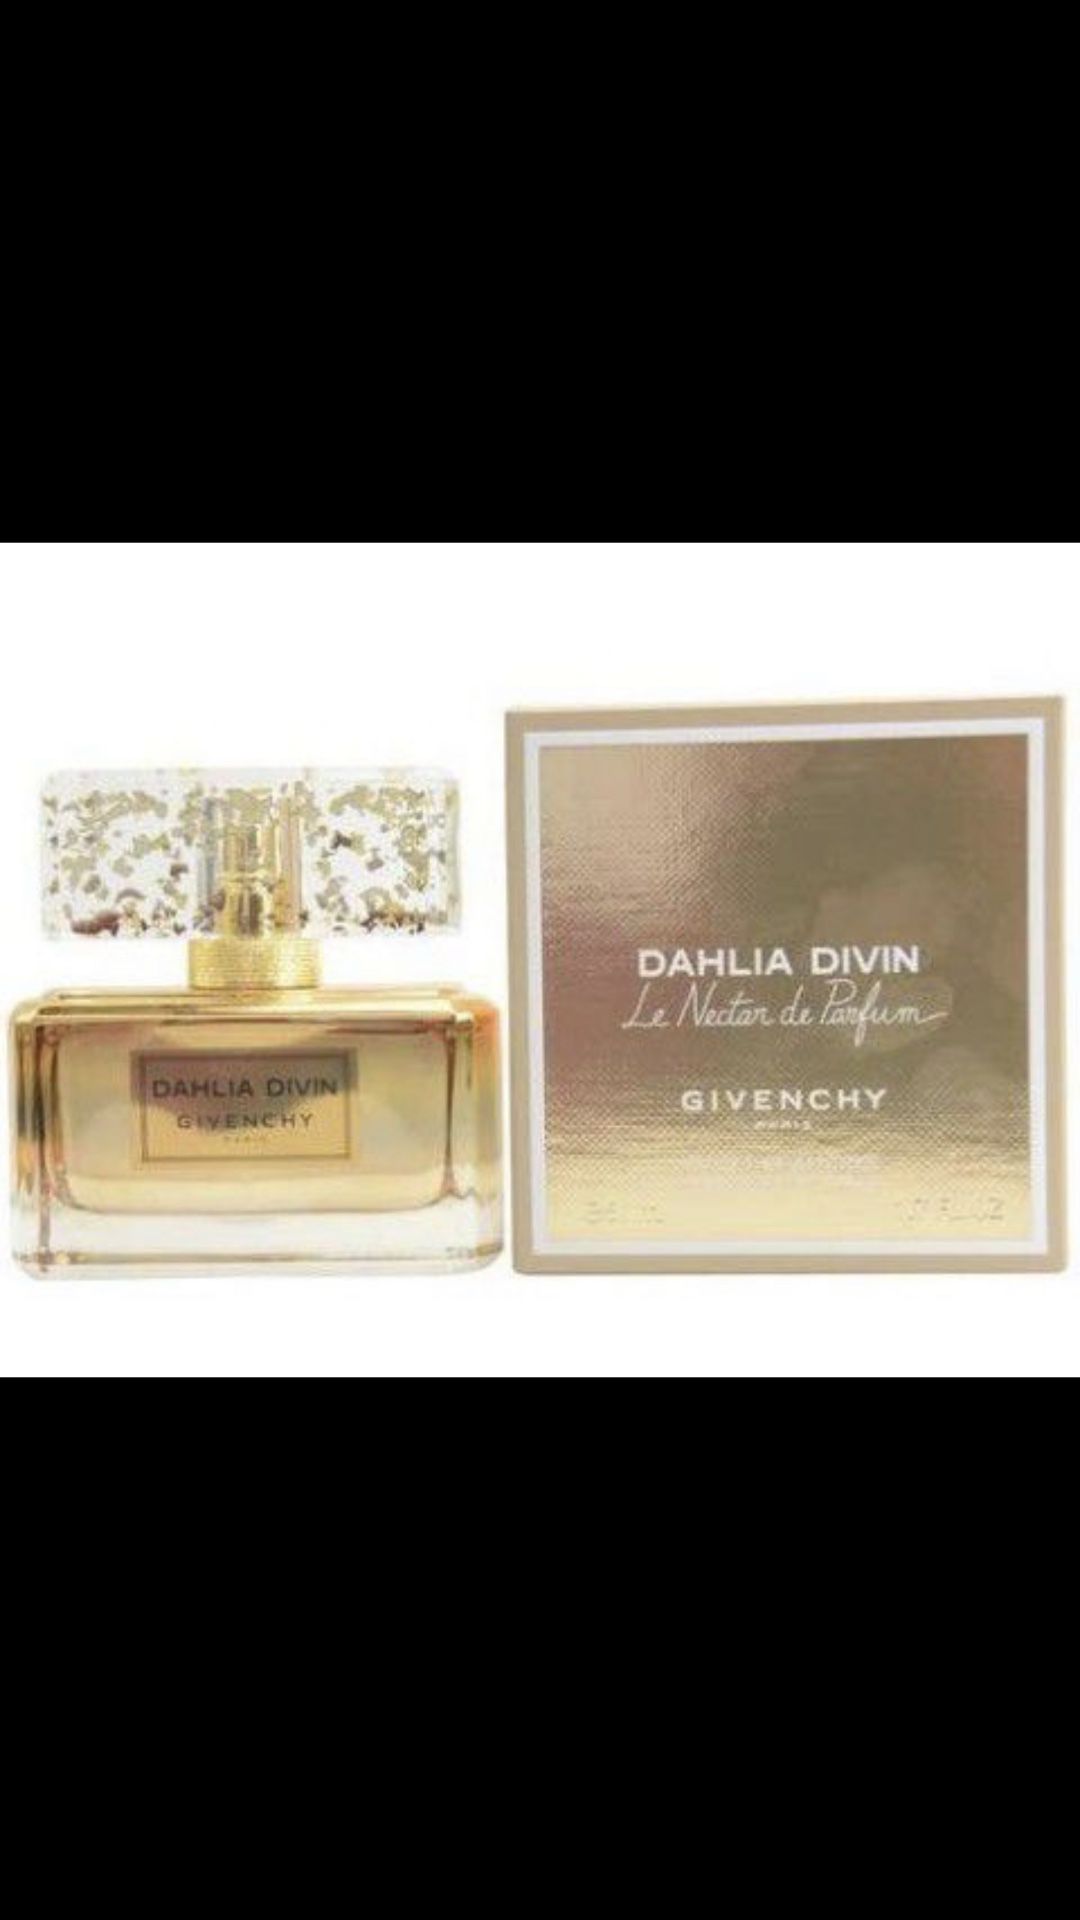 Dahlia Givenchy perfume